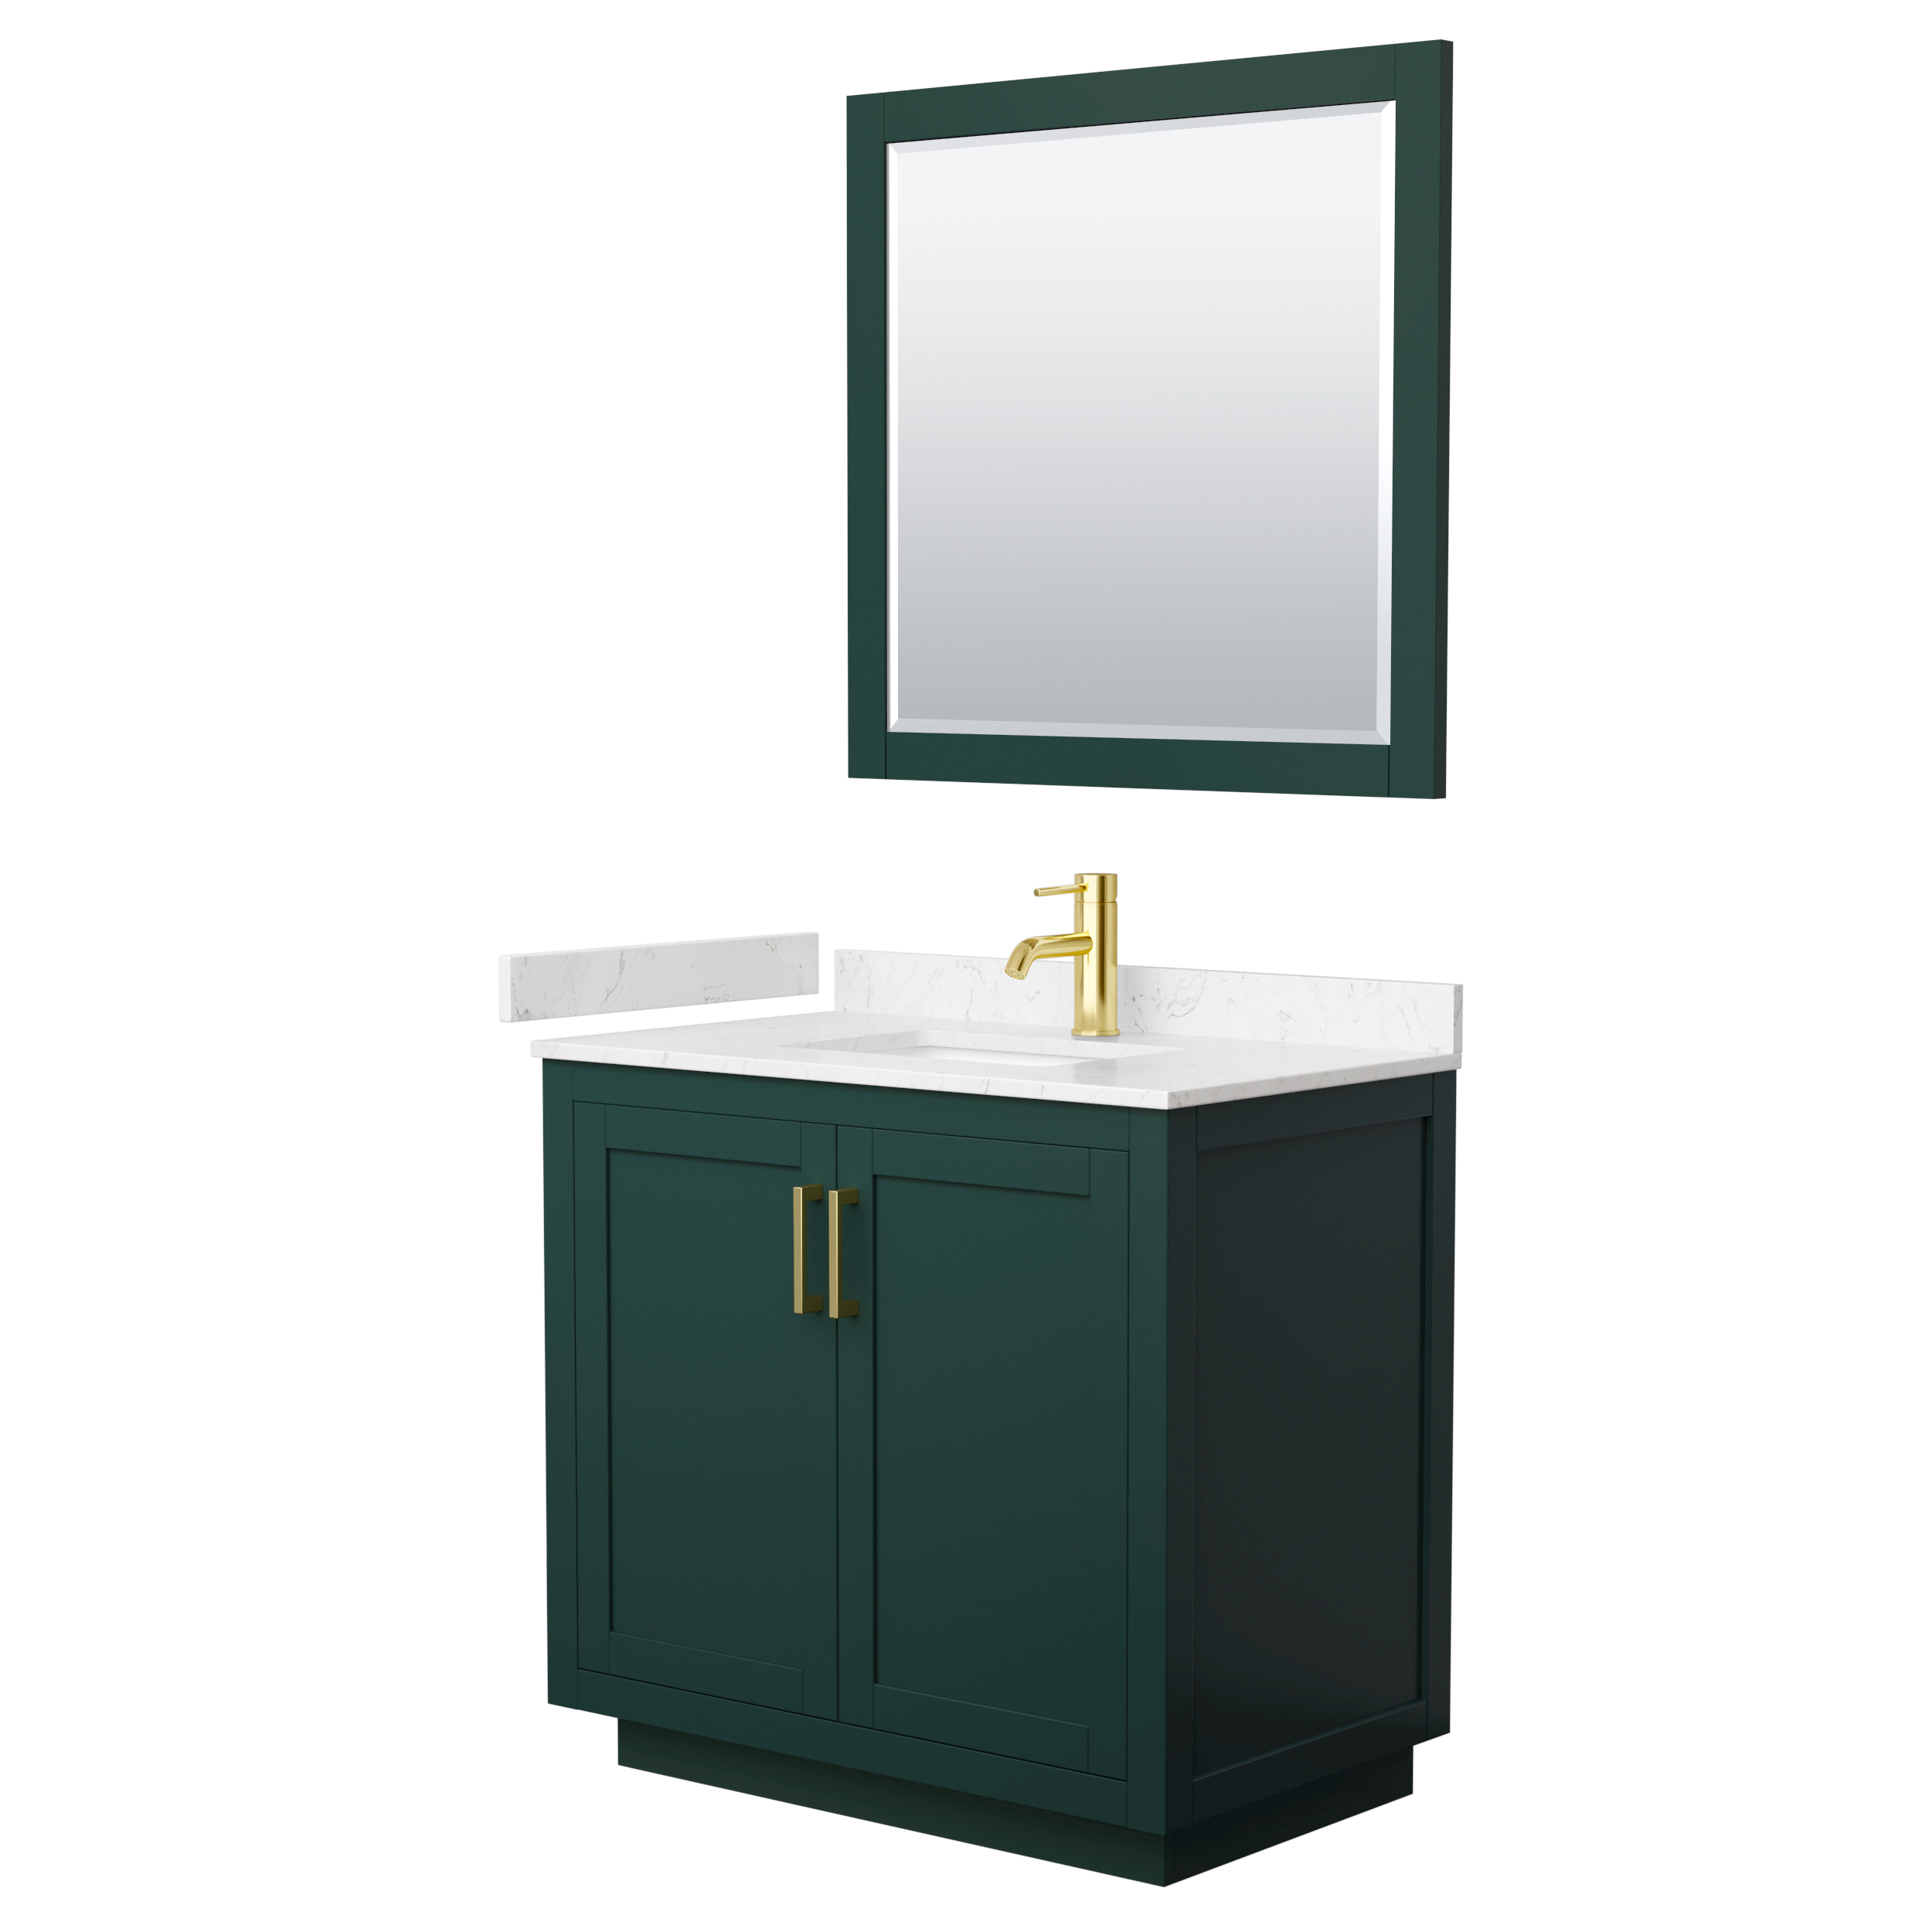 Miranda 36" Single Vanity with Cultured Marble Counter - Green WC-2929-36-SGL-VAN-GRN-